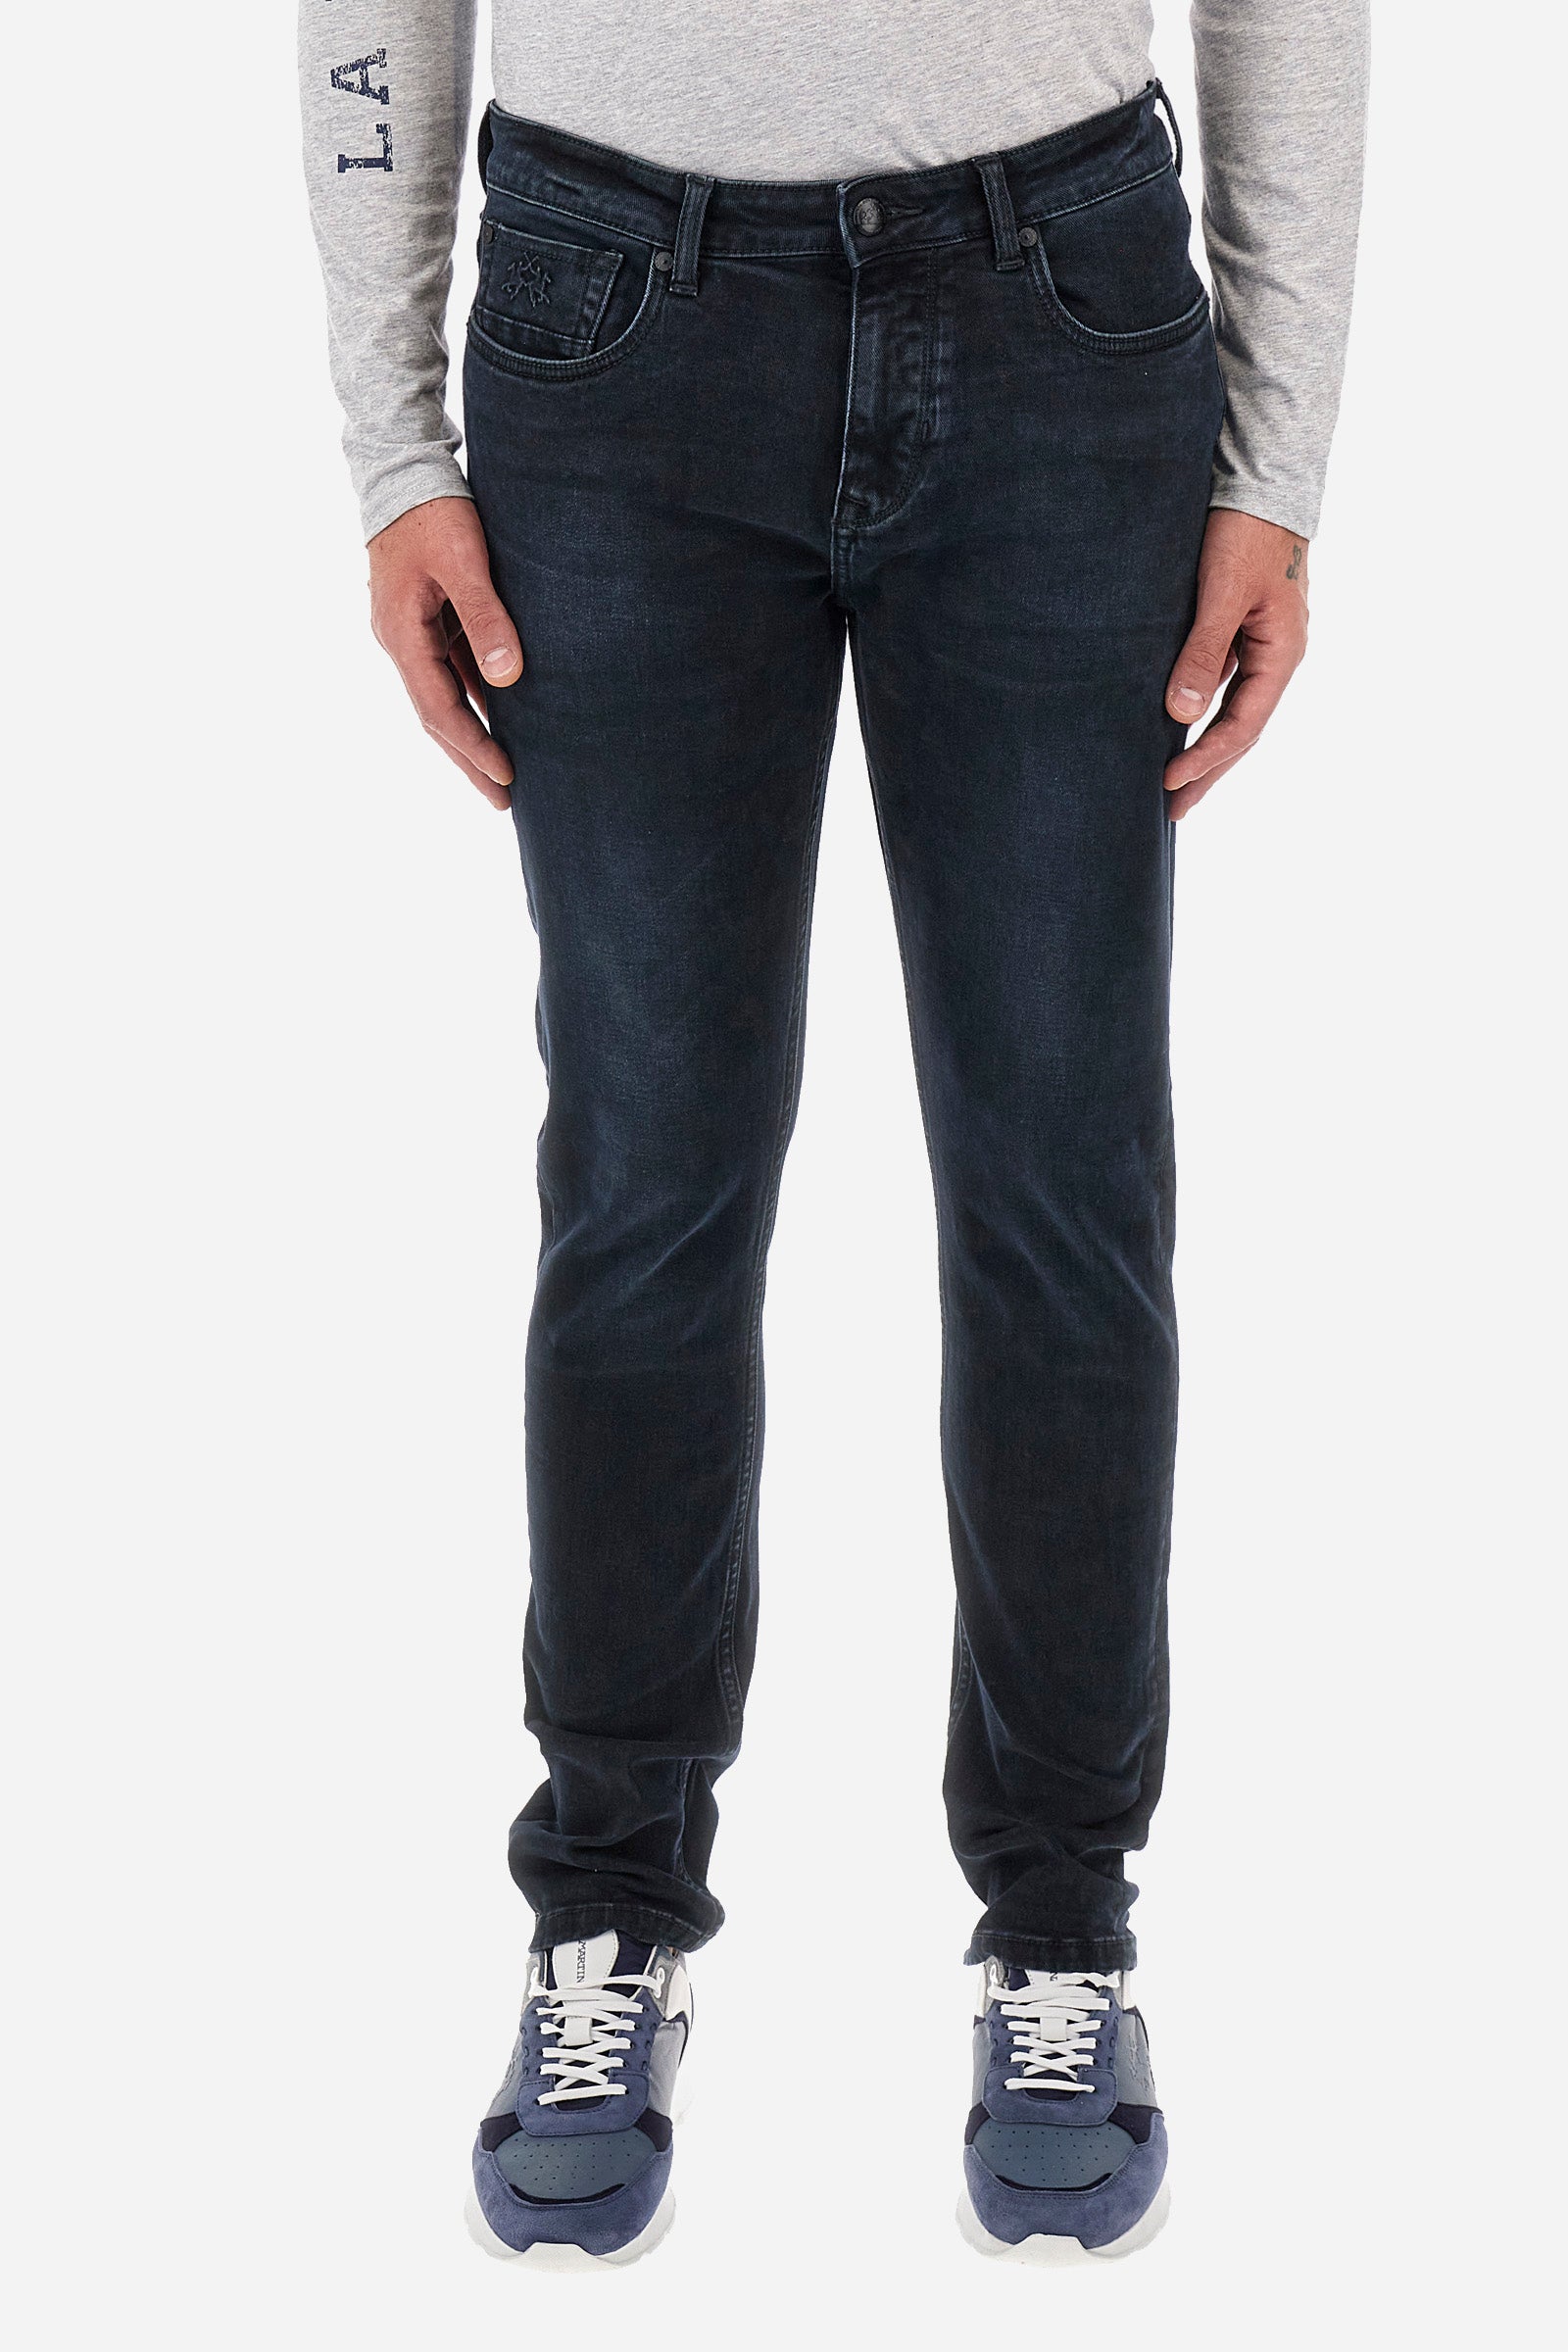 Pantaloni jeans 5 tasche uomo in denim nero e straight fit - Warick - Dark Indigo Denim